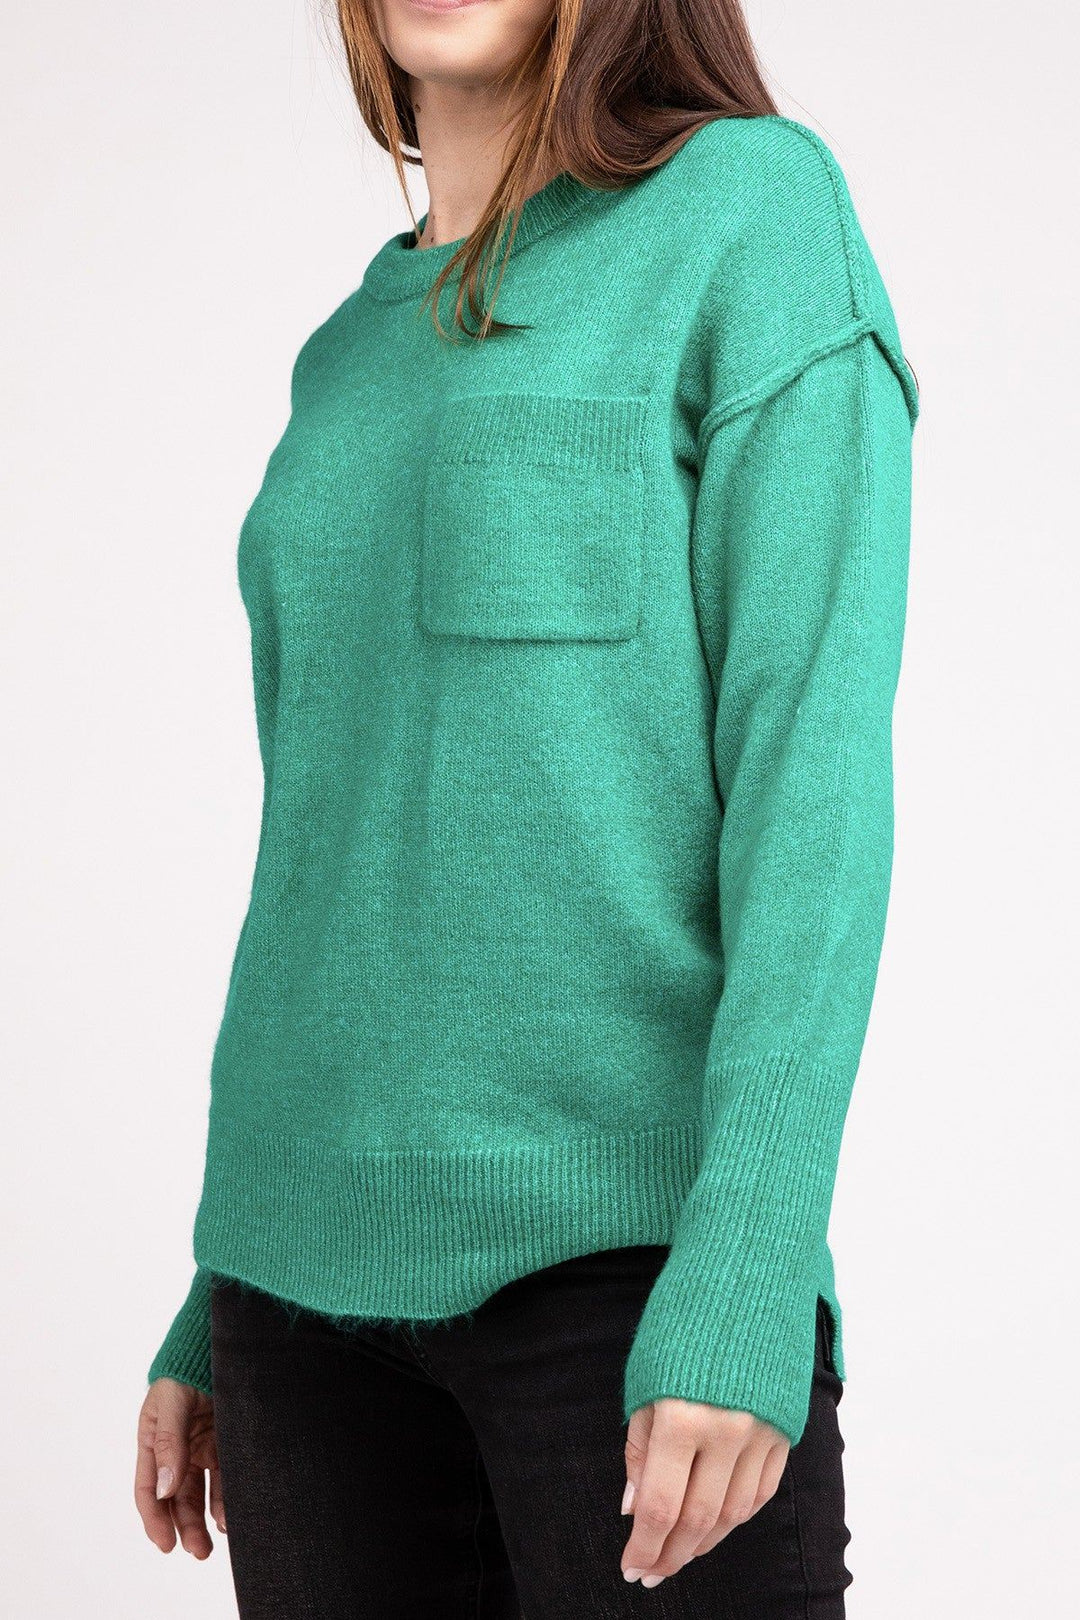 Zenana Melange Hi-Low Sweater - Inspired Eye Boutique